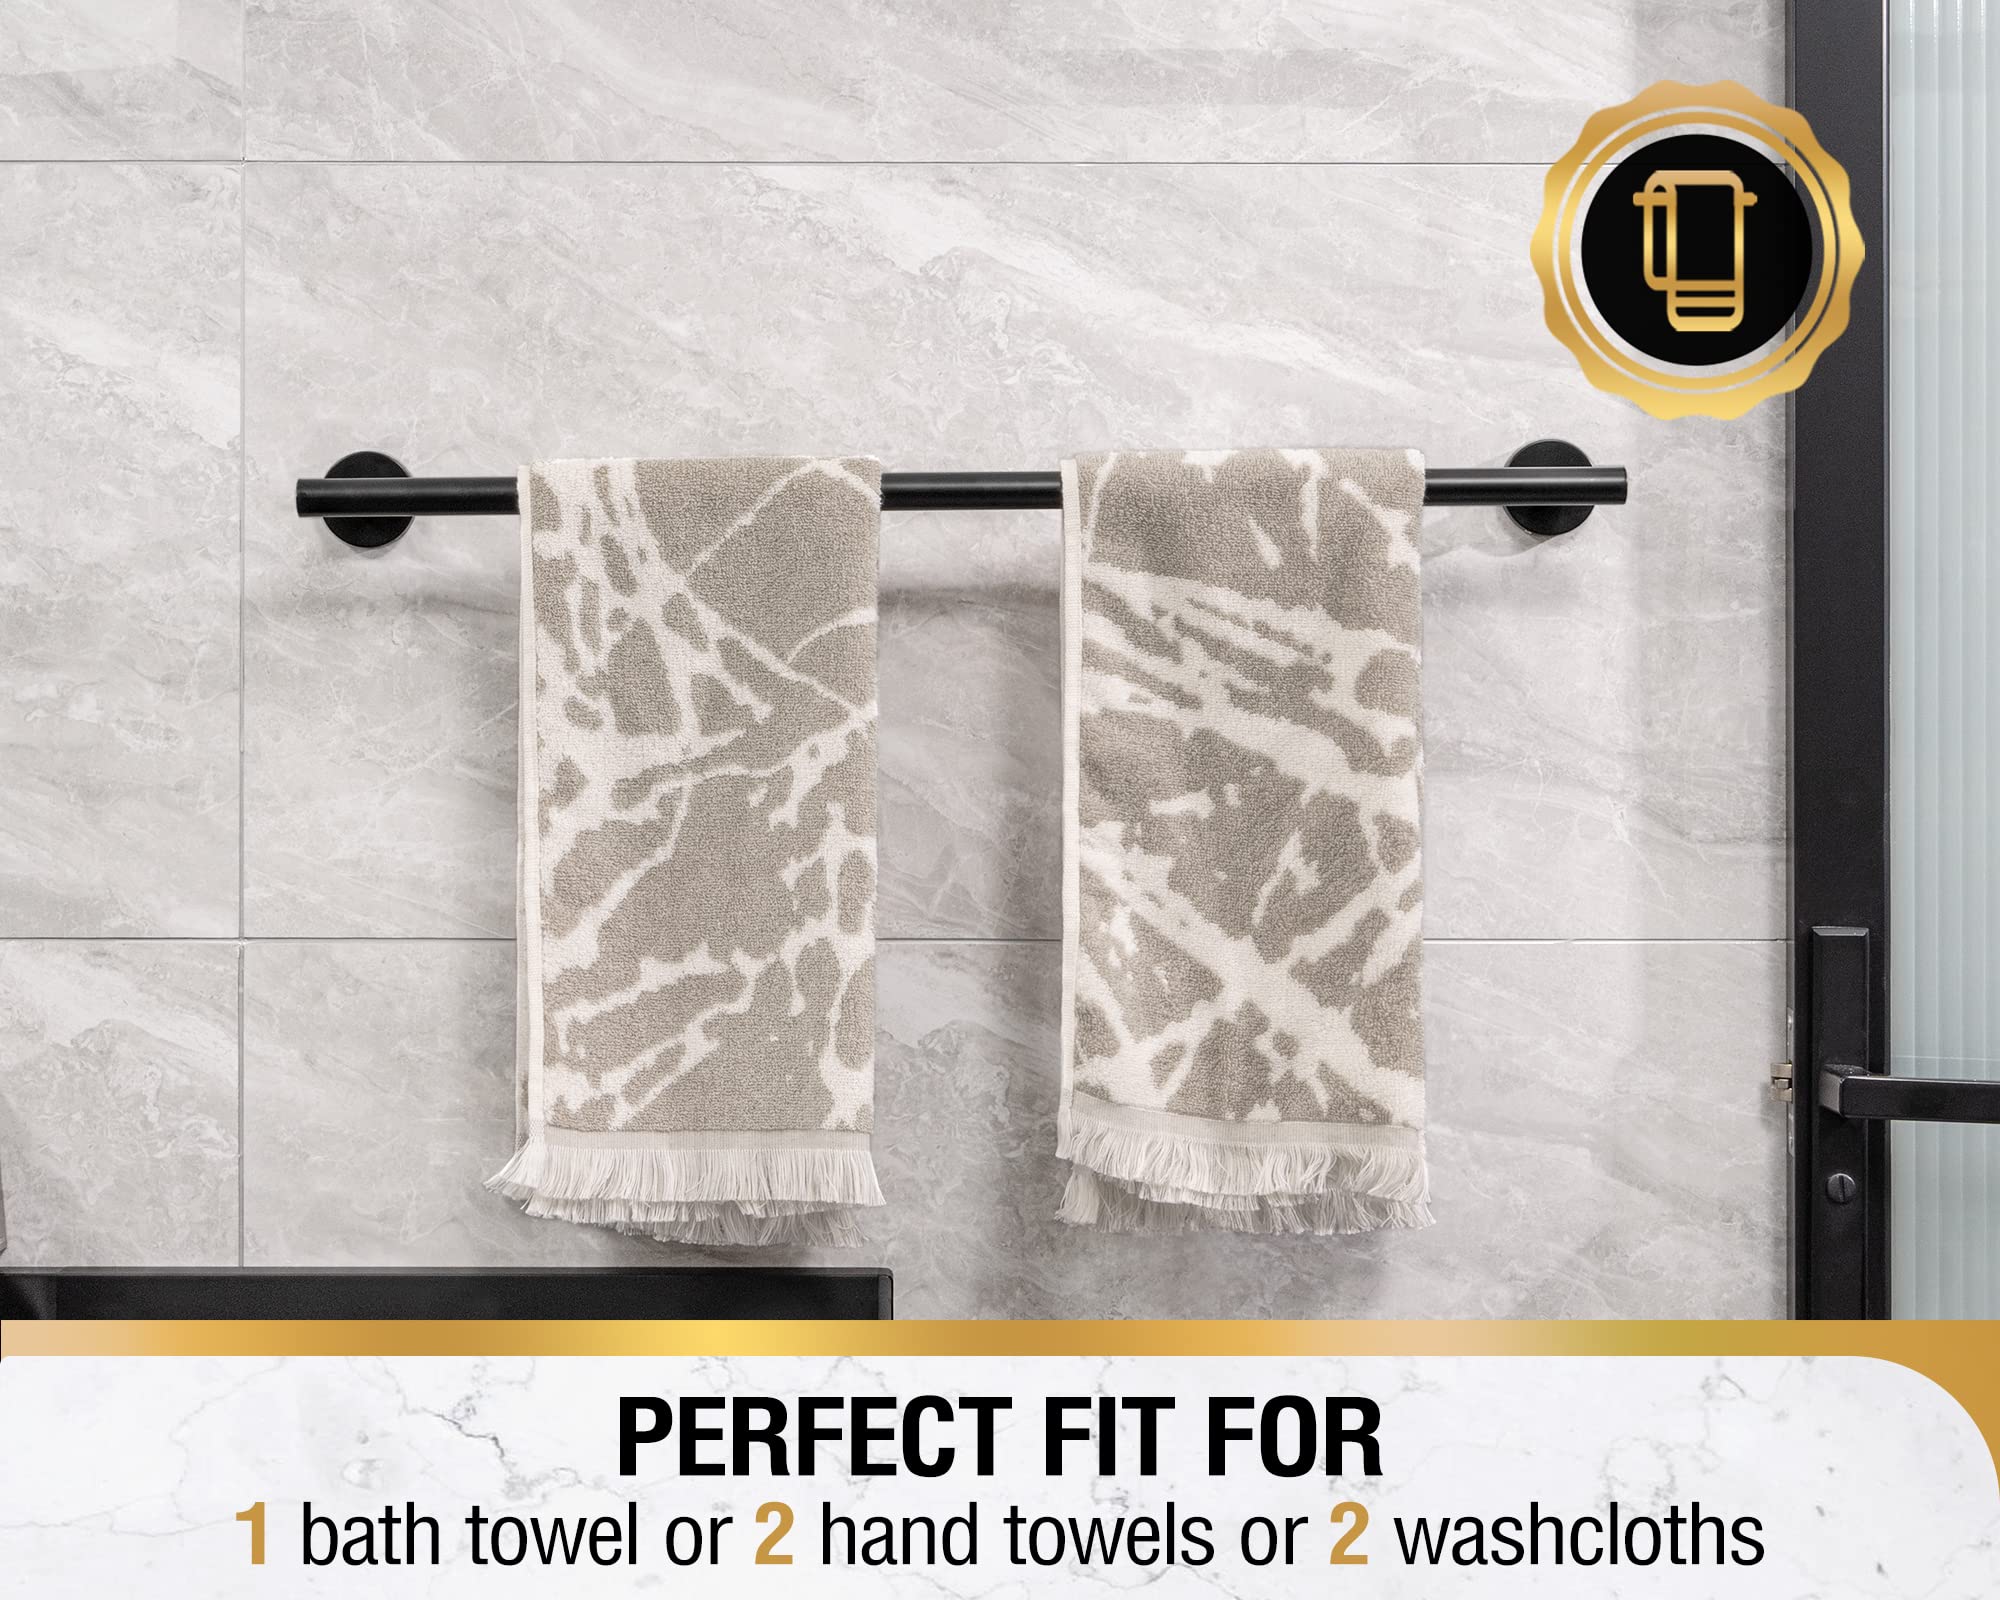 tower rack wall mounted towel bar bathroom stainless steel bath towel holder 25.9 inch black